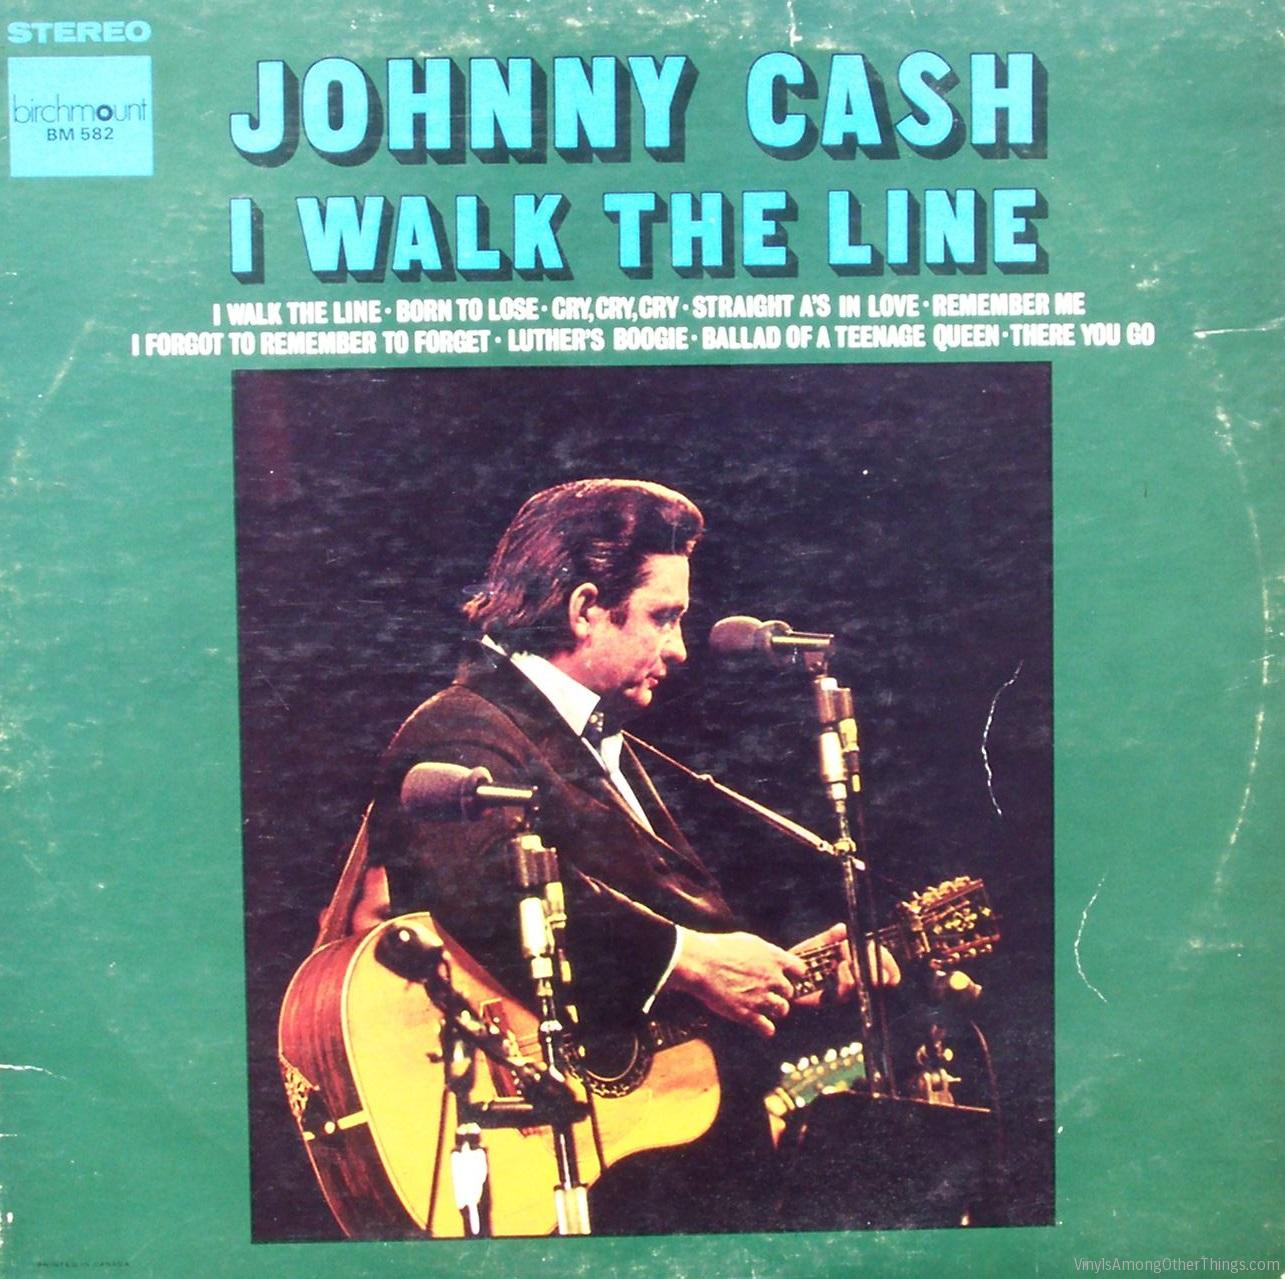 Johnny Cash – “I Walk the Line”